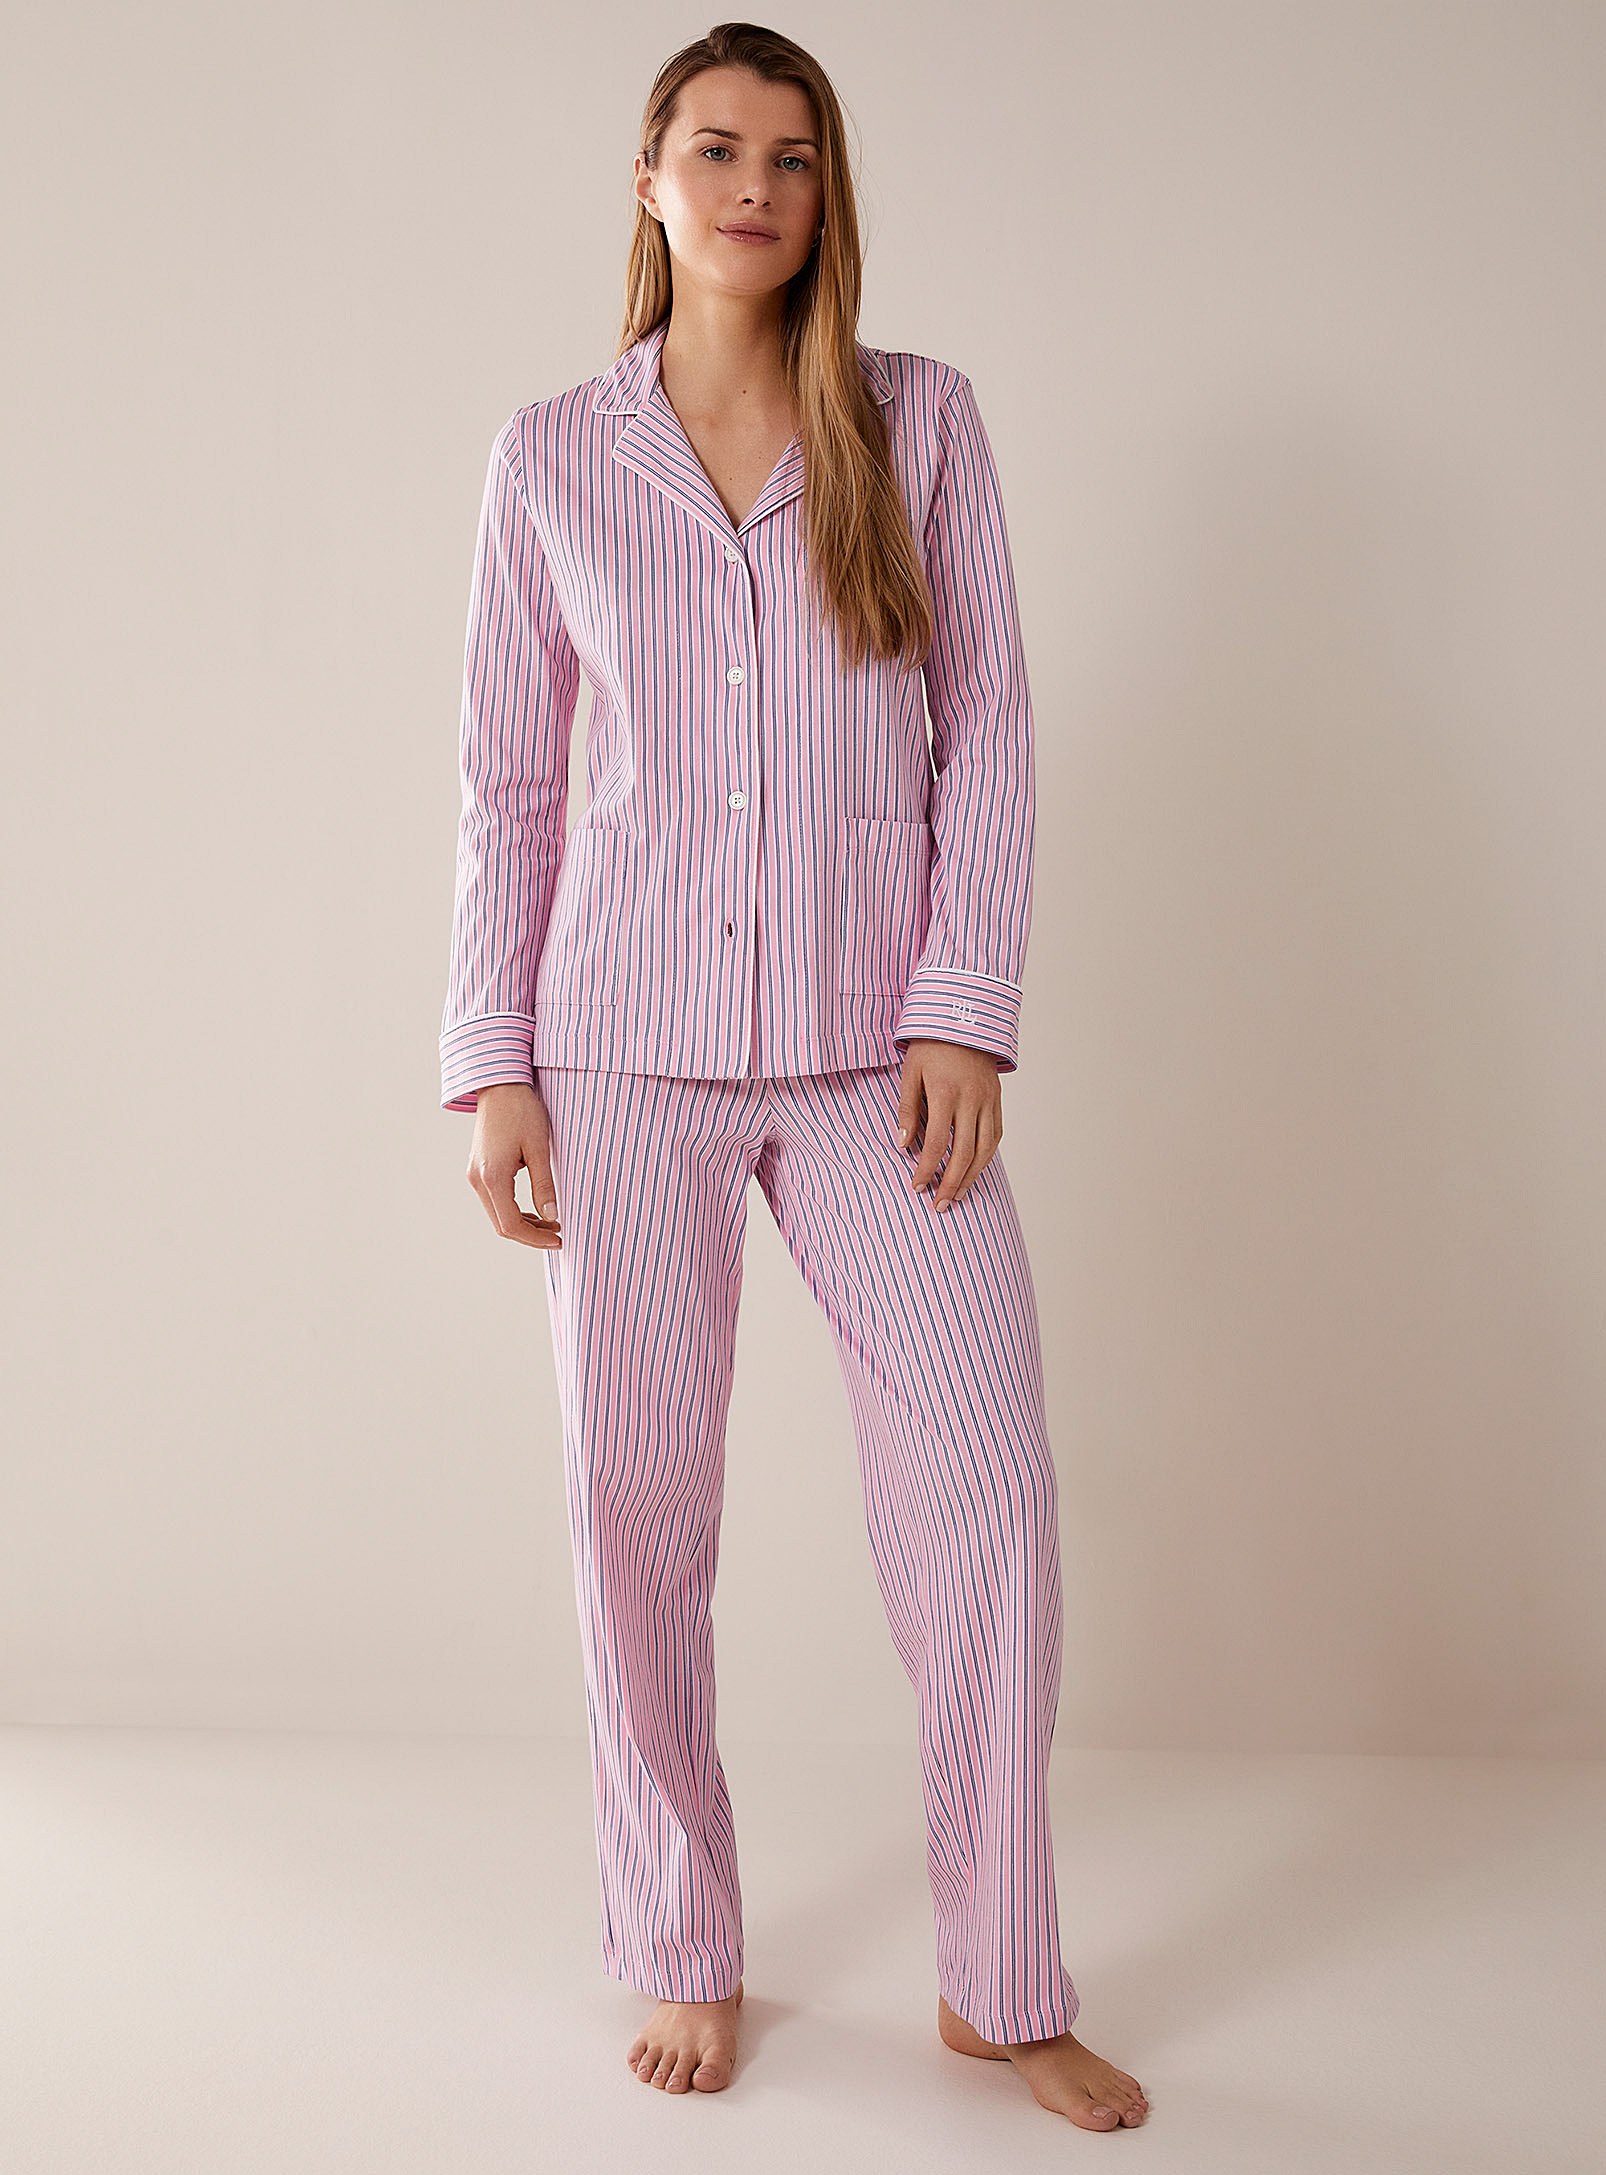 Lauren par Ralph - Women's Pink and blue striped pyjama set